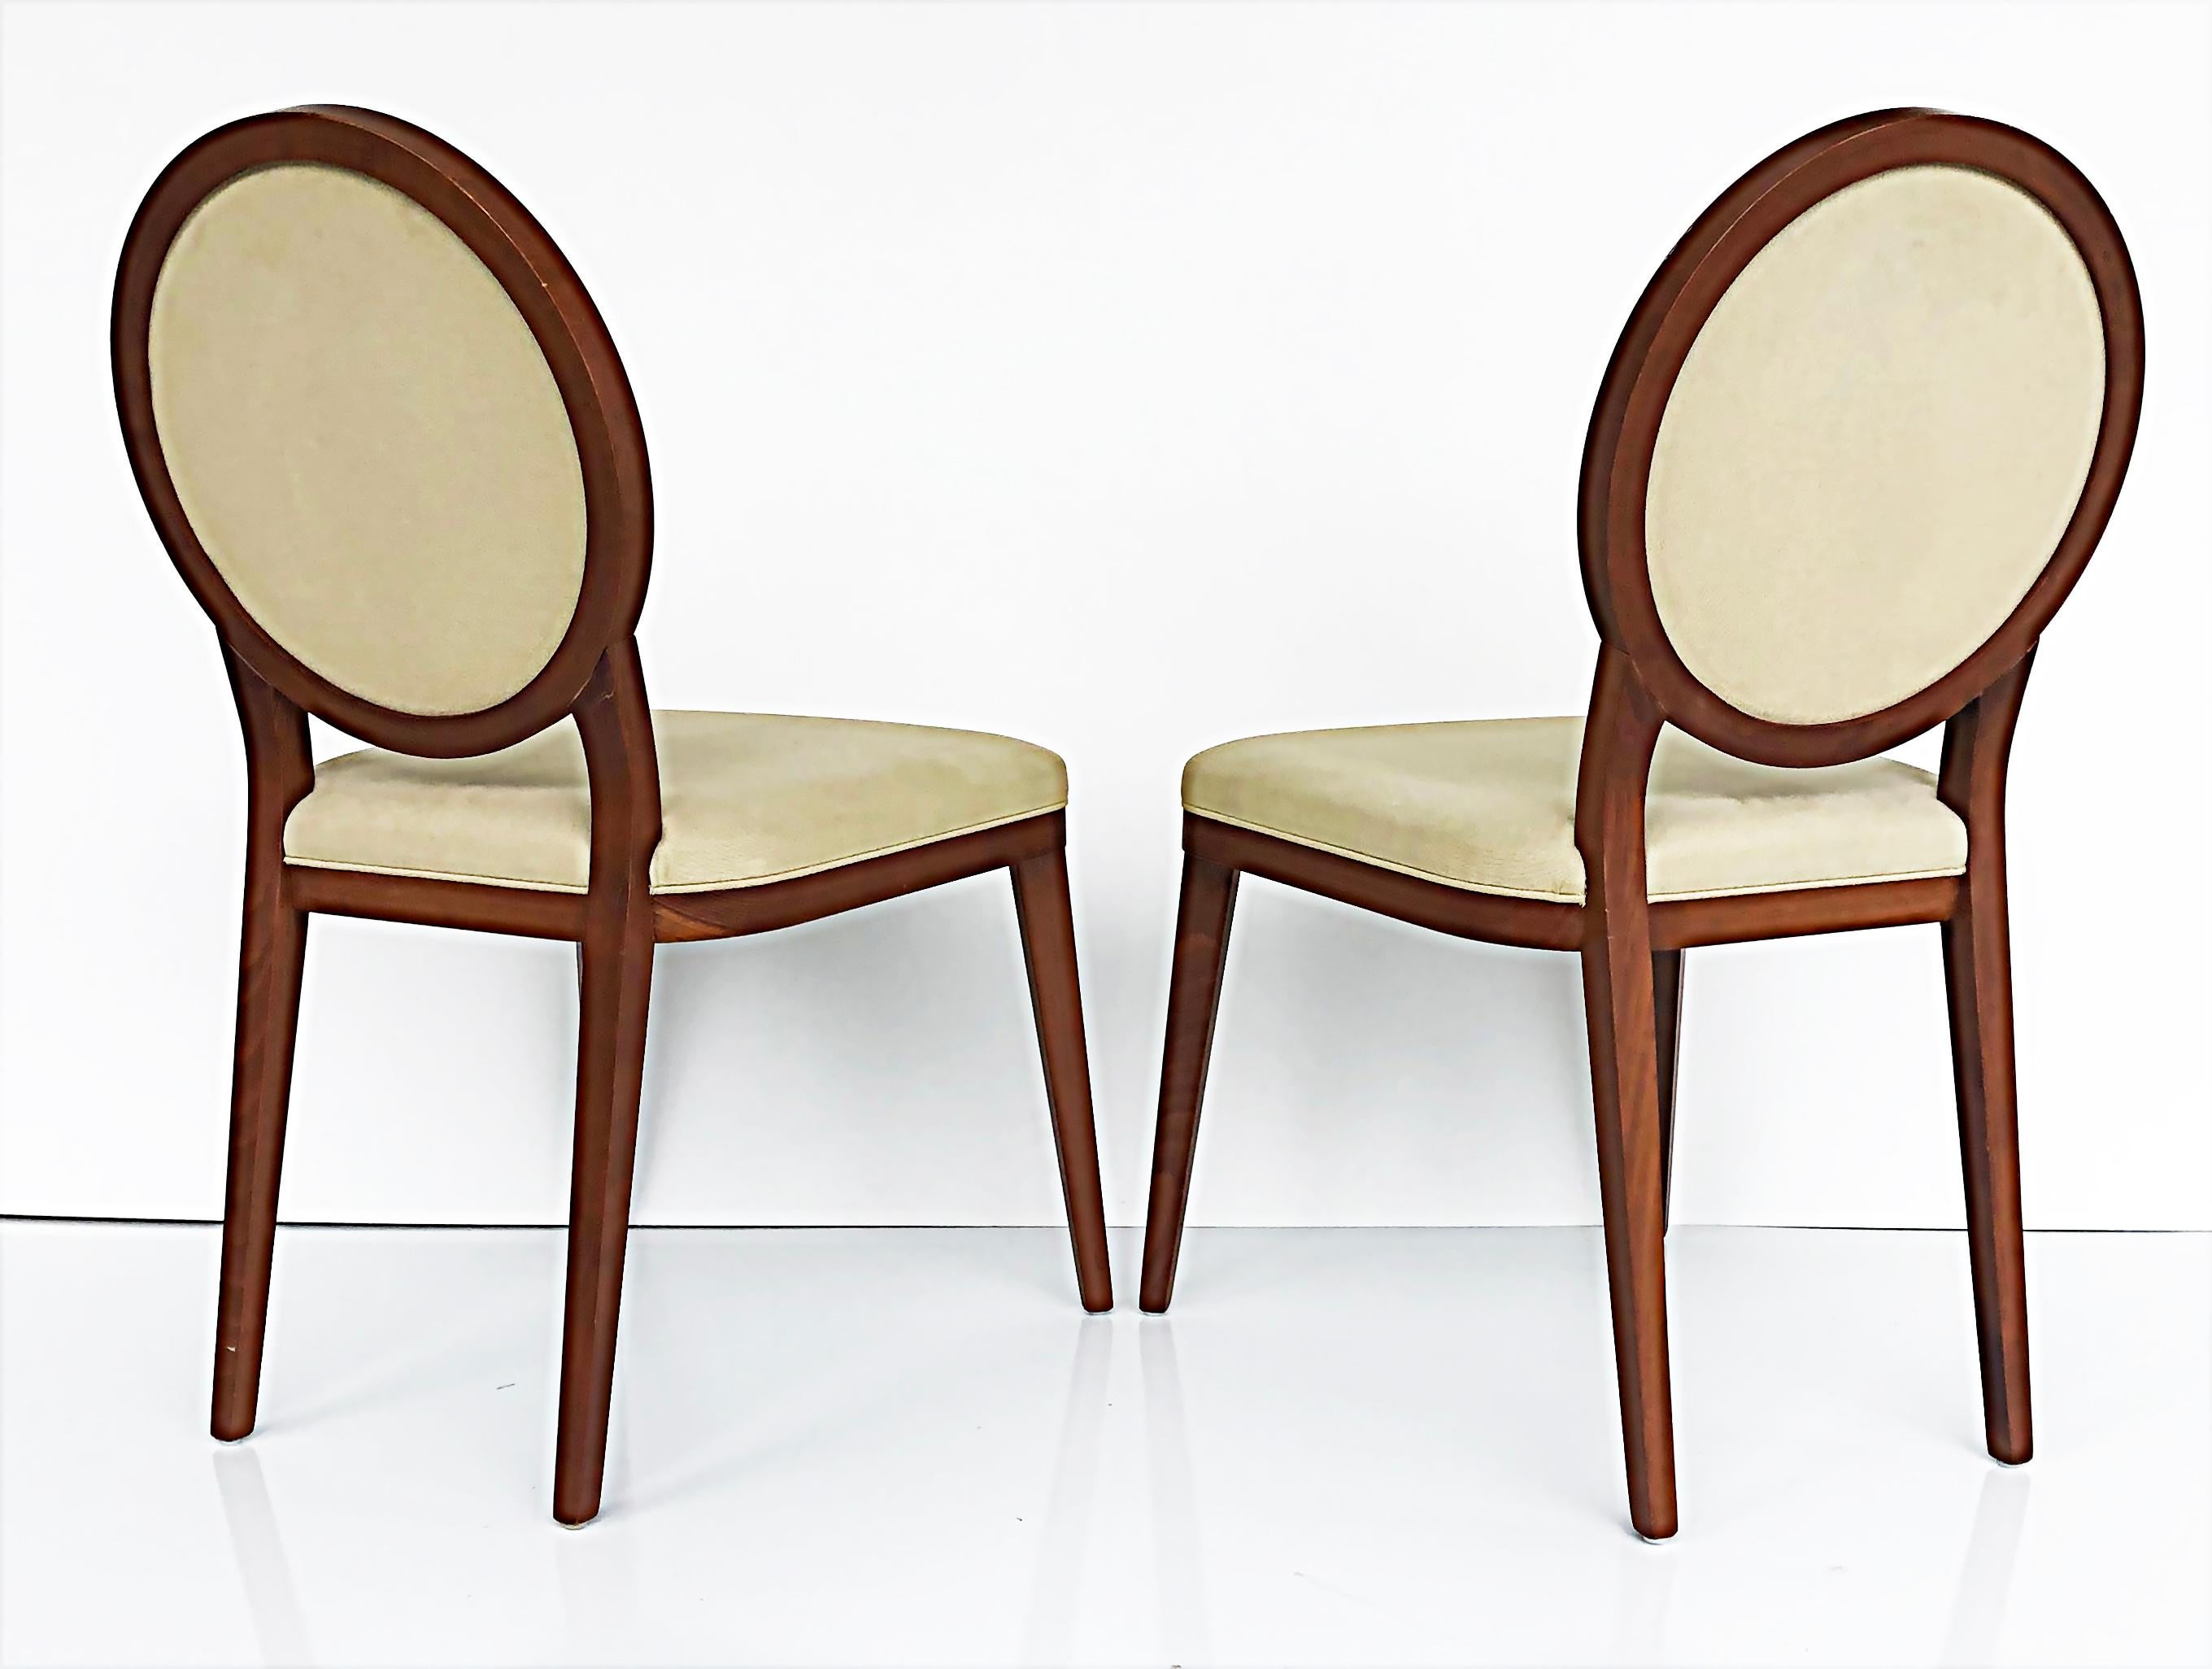 Bross Studio Riforma Italy Art Deco Style Beech Wood Chairs, Set of 6 7